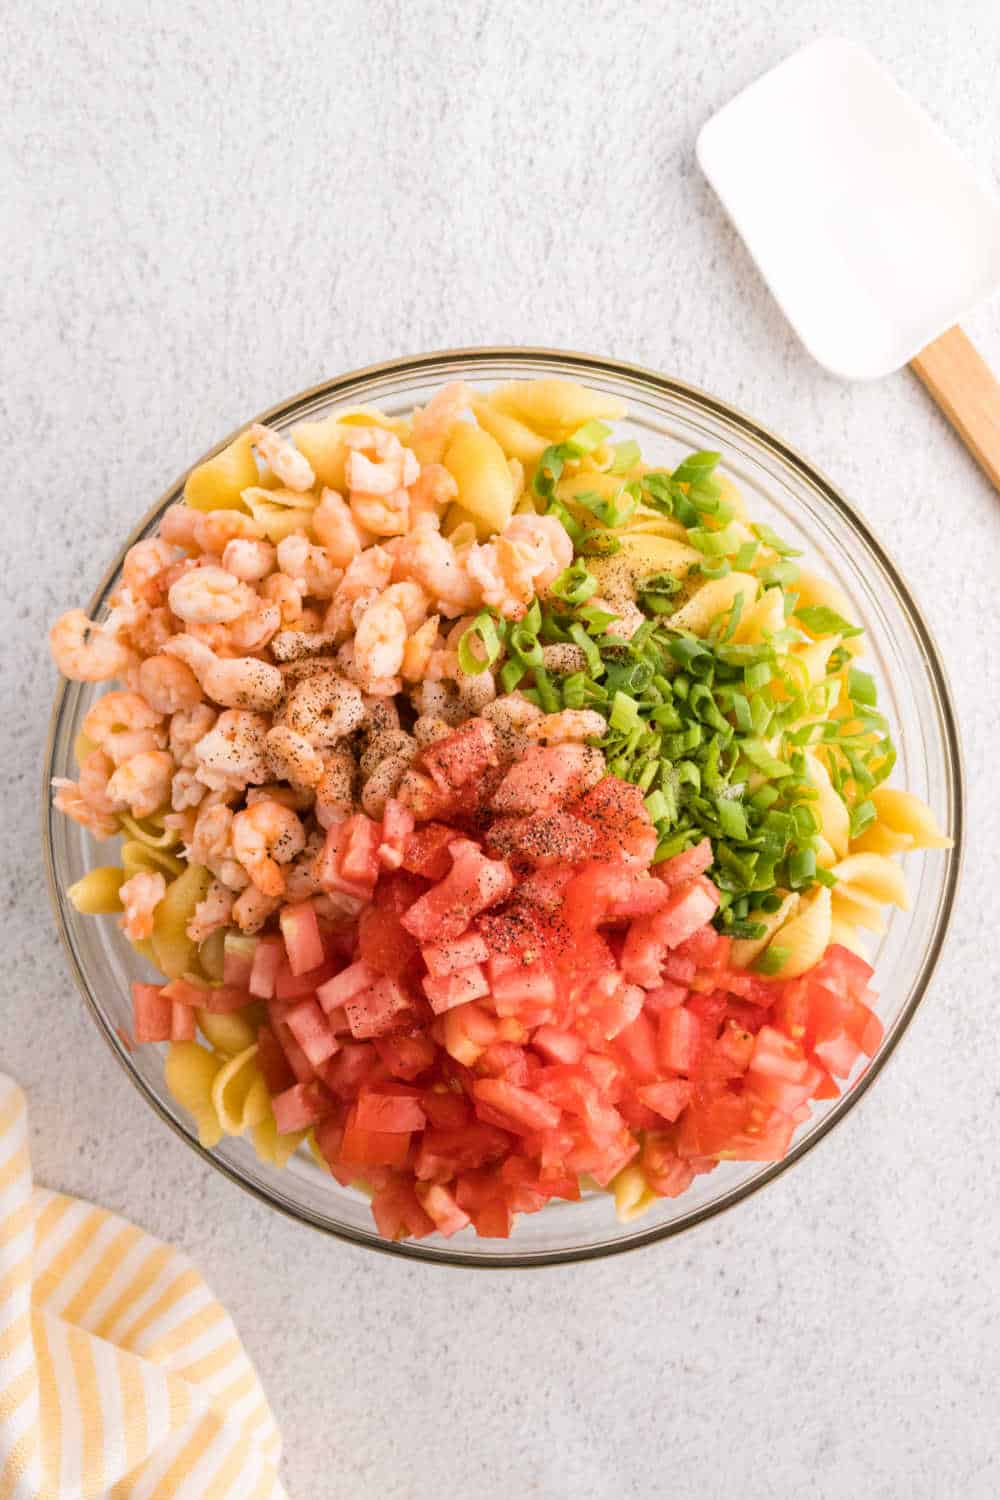 Shrimp pasta salad ingredients in a mixing bowl.